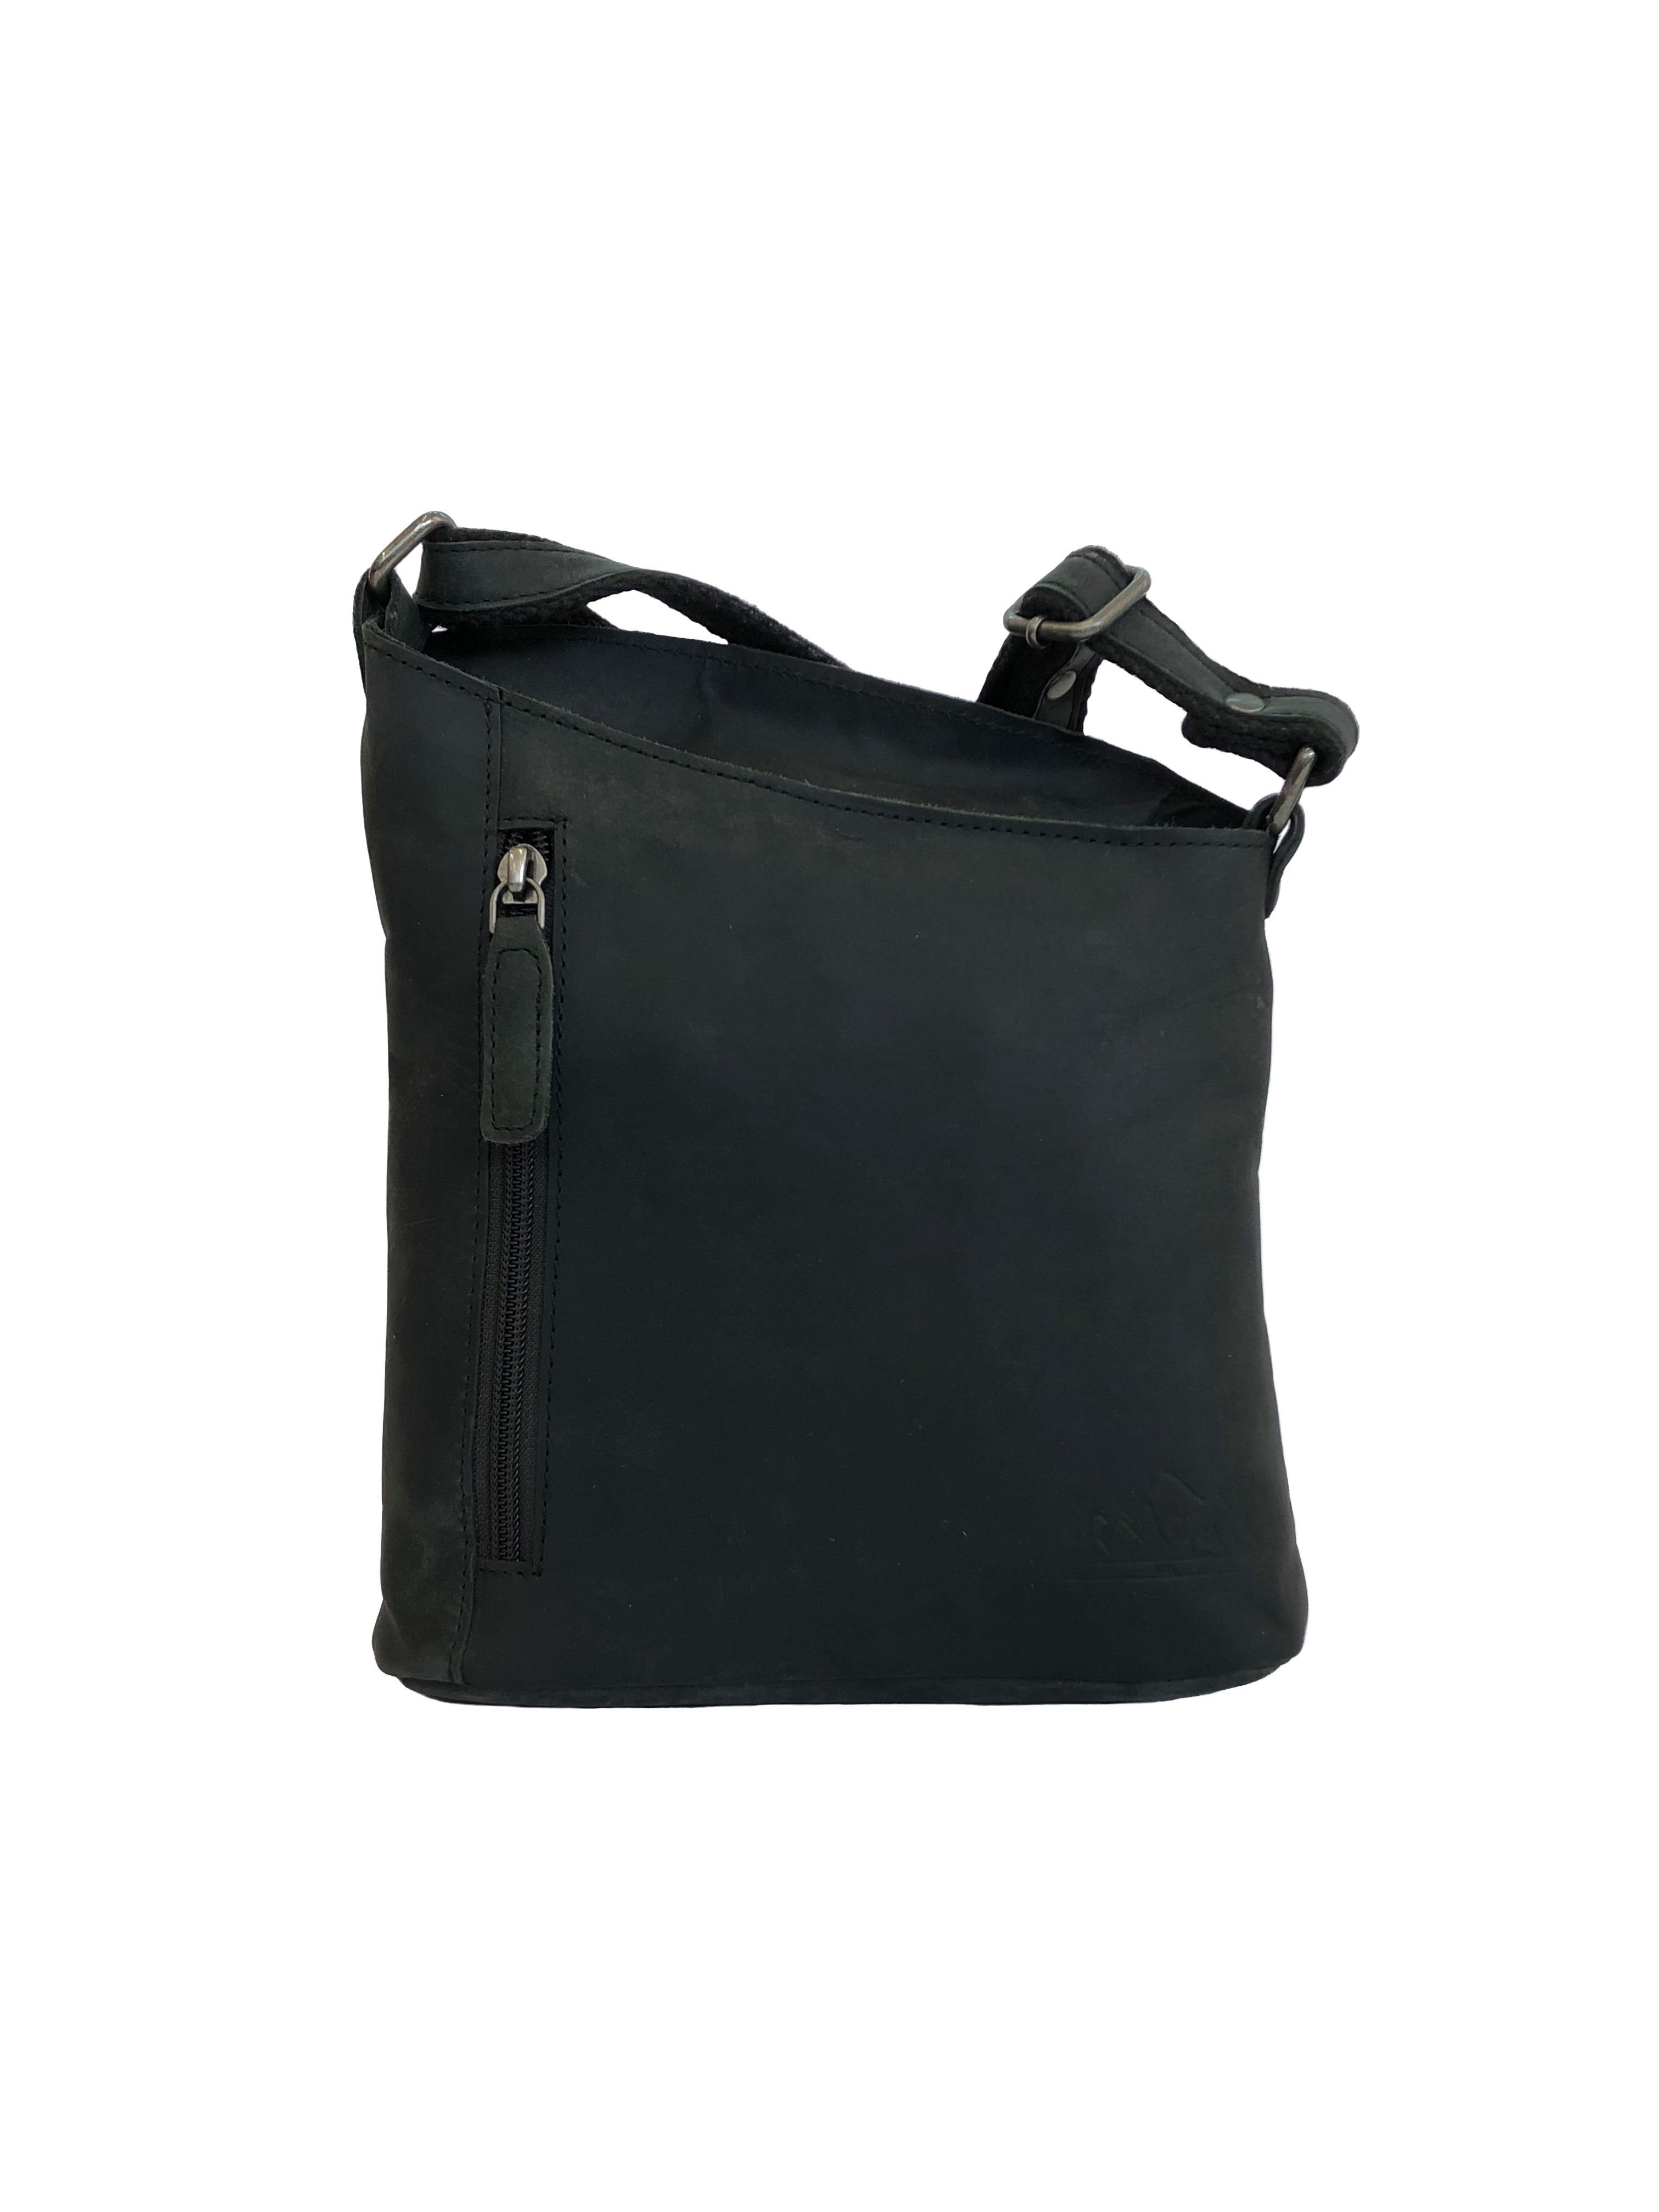 Crossbody Black PAULA, Bag Umhängetasche Ledertasche Vintage Bag Bayern Handtasche